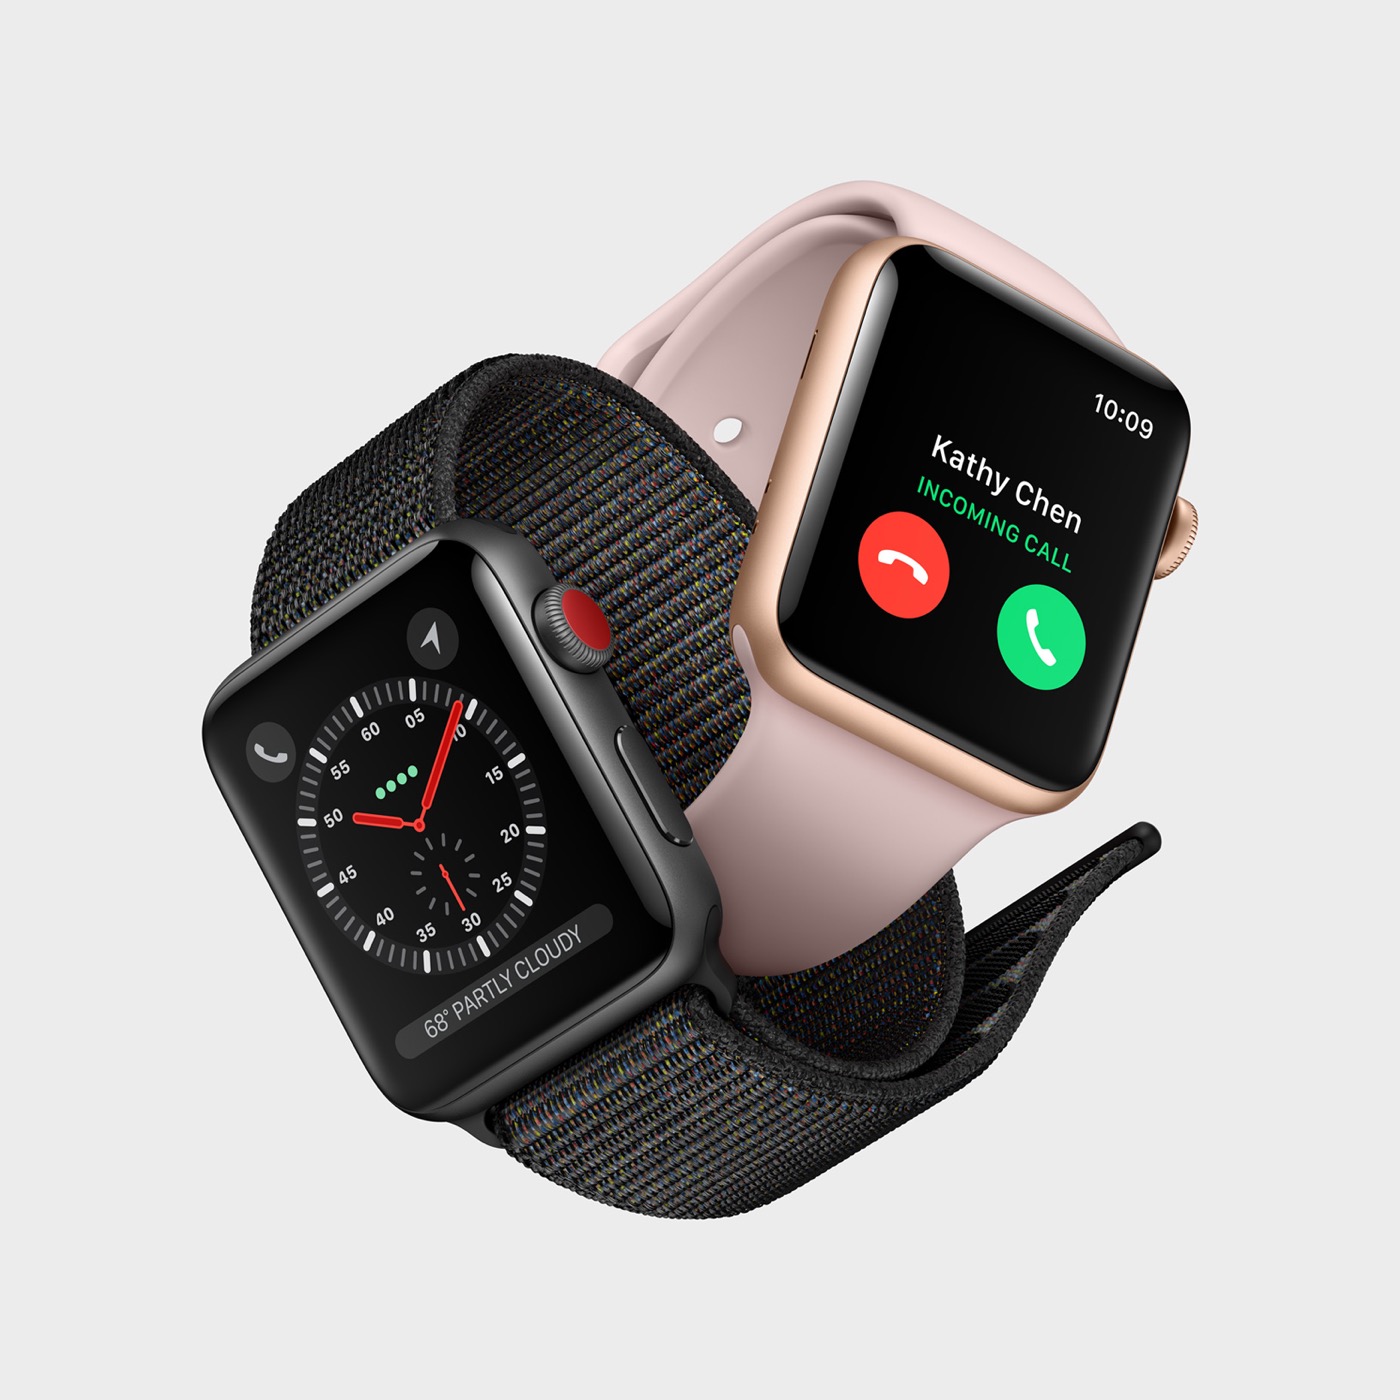 ｢Apple Watch Series 3｣のセルラー版は日本の緊急速報に対応